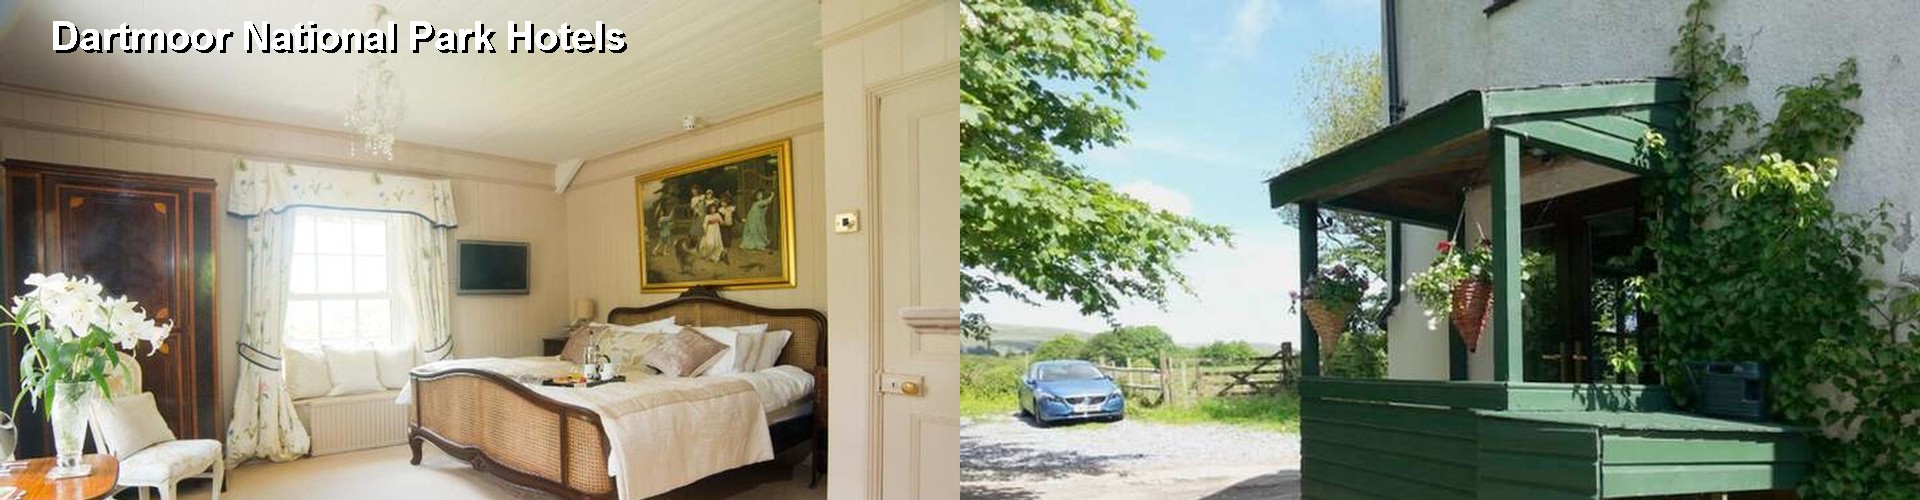 5 Best Hotels near Dartmoor National Park